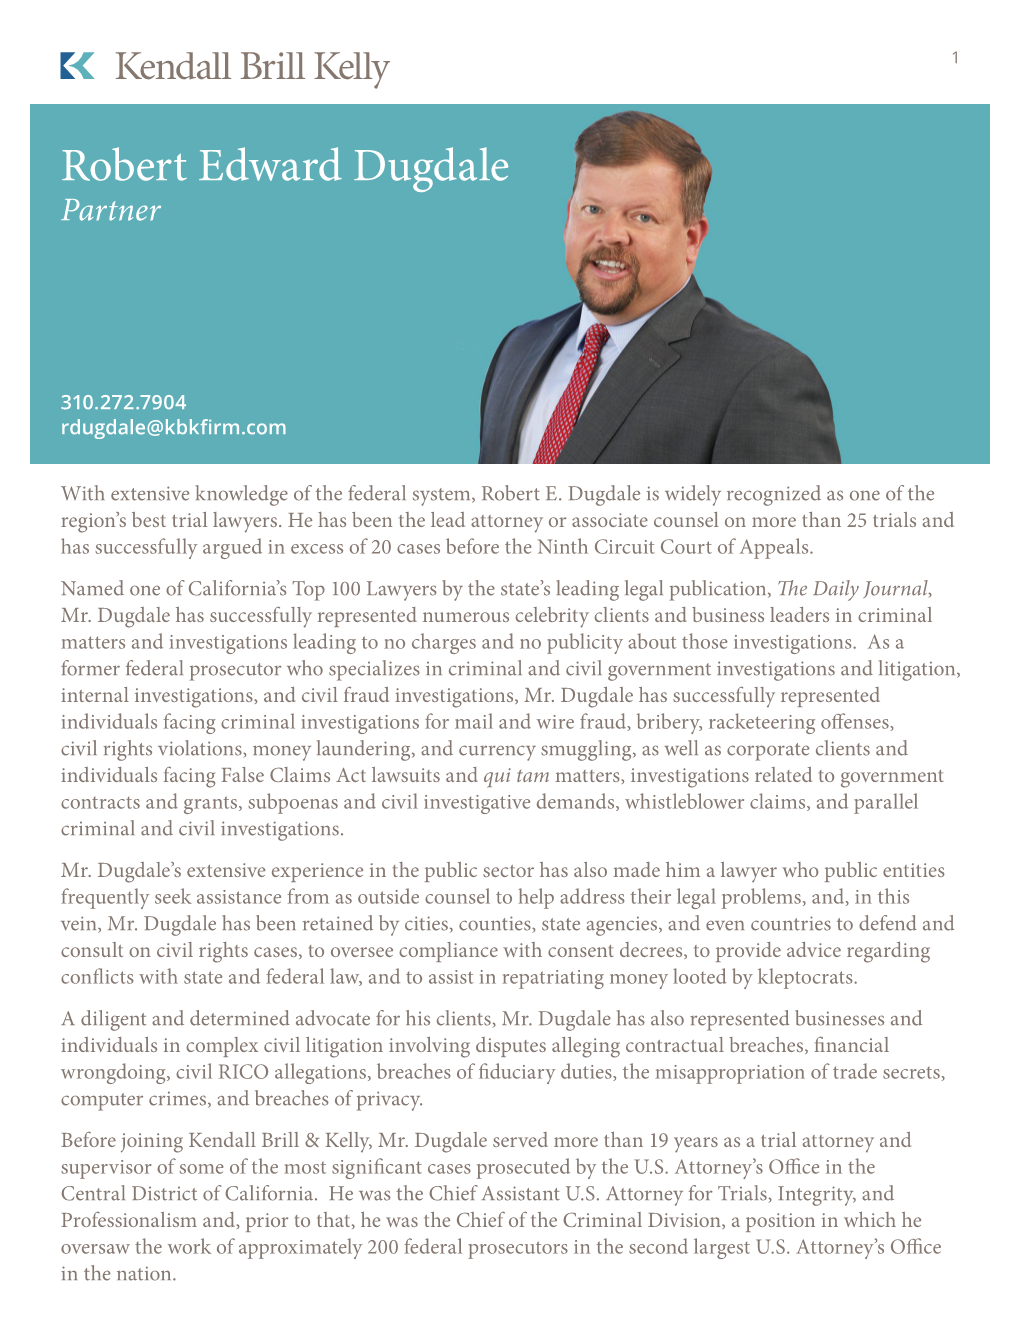 Robert Edward Dugdale Partner